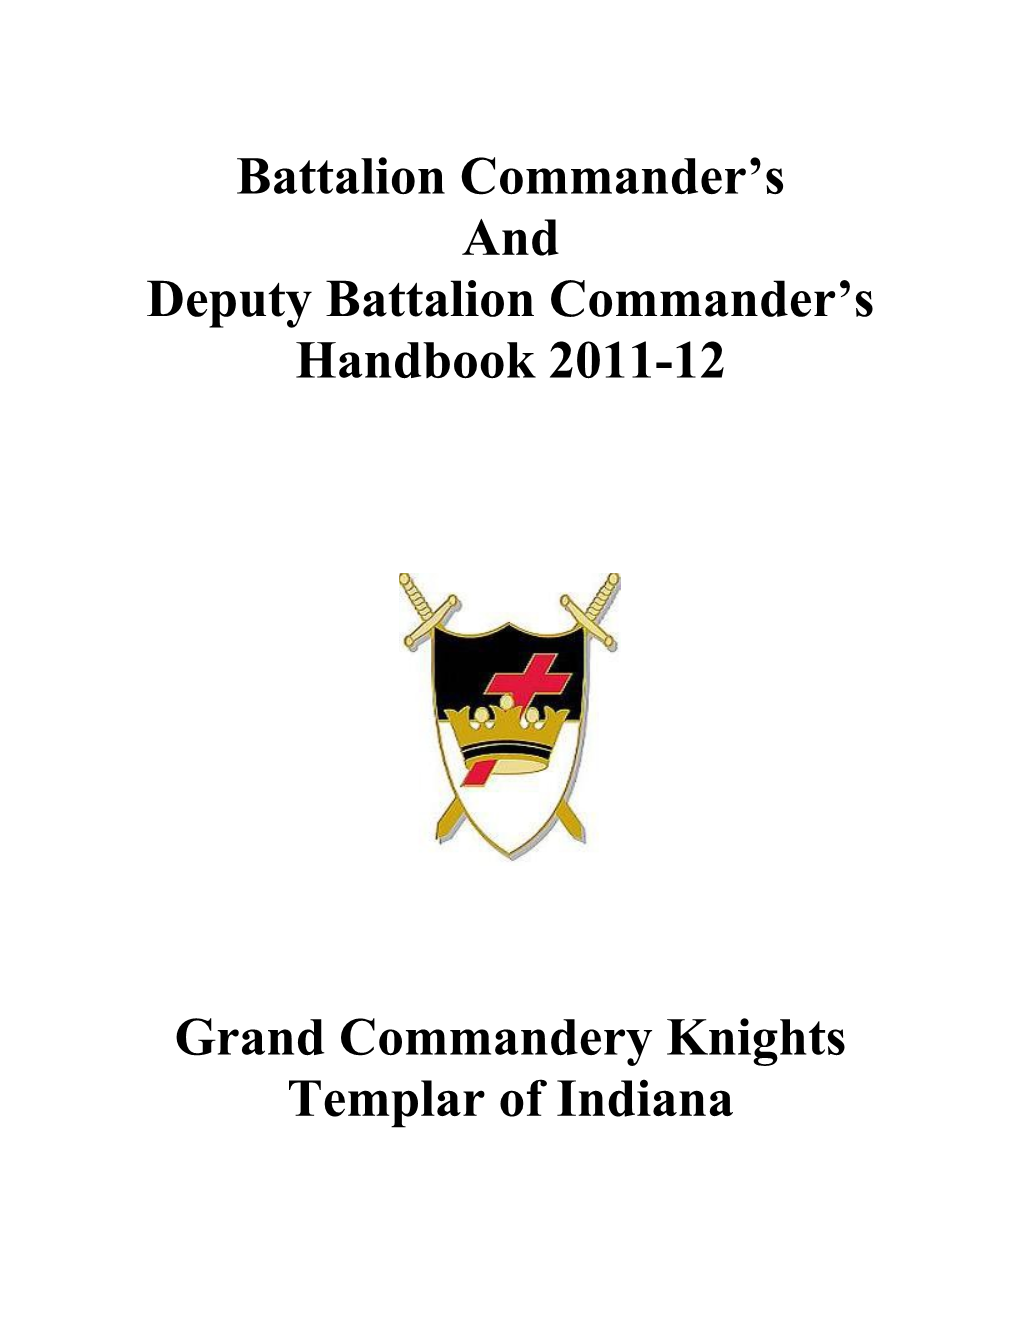 Deputy Battalion Commanders Handbook